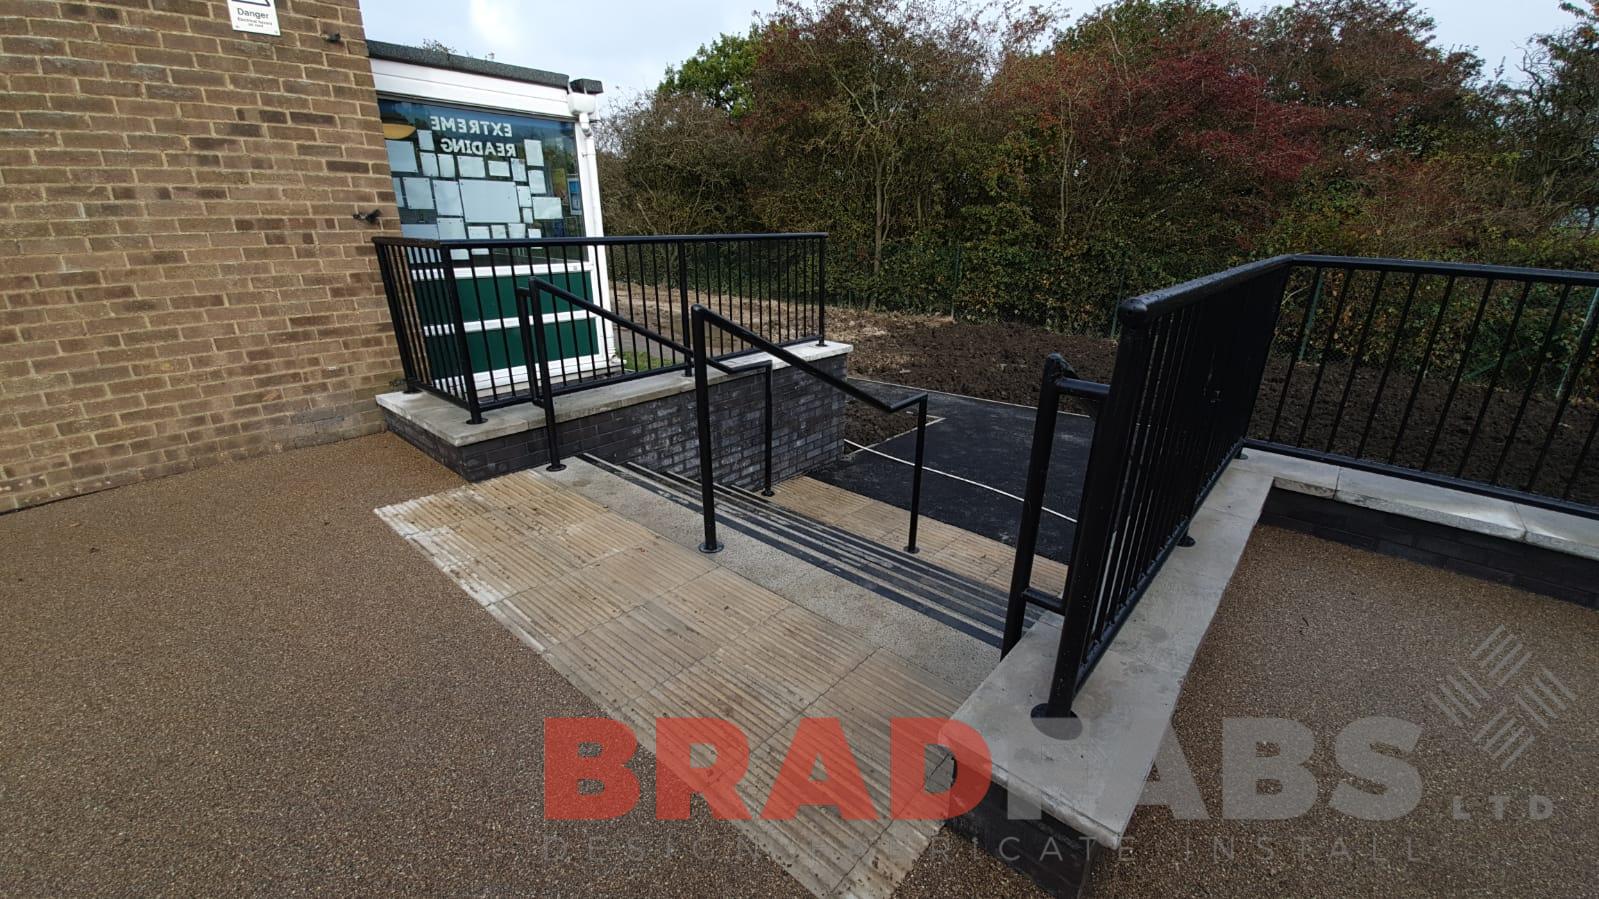 mild steel, galvanised and powder coated black railings for a school, by Bradfabs Ltd 